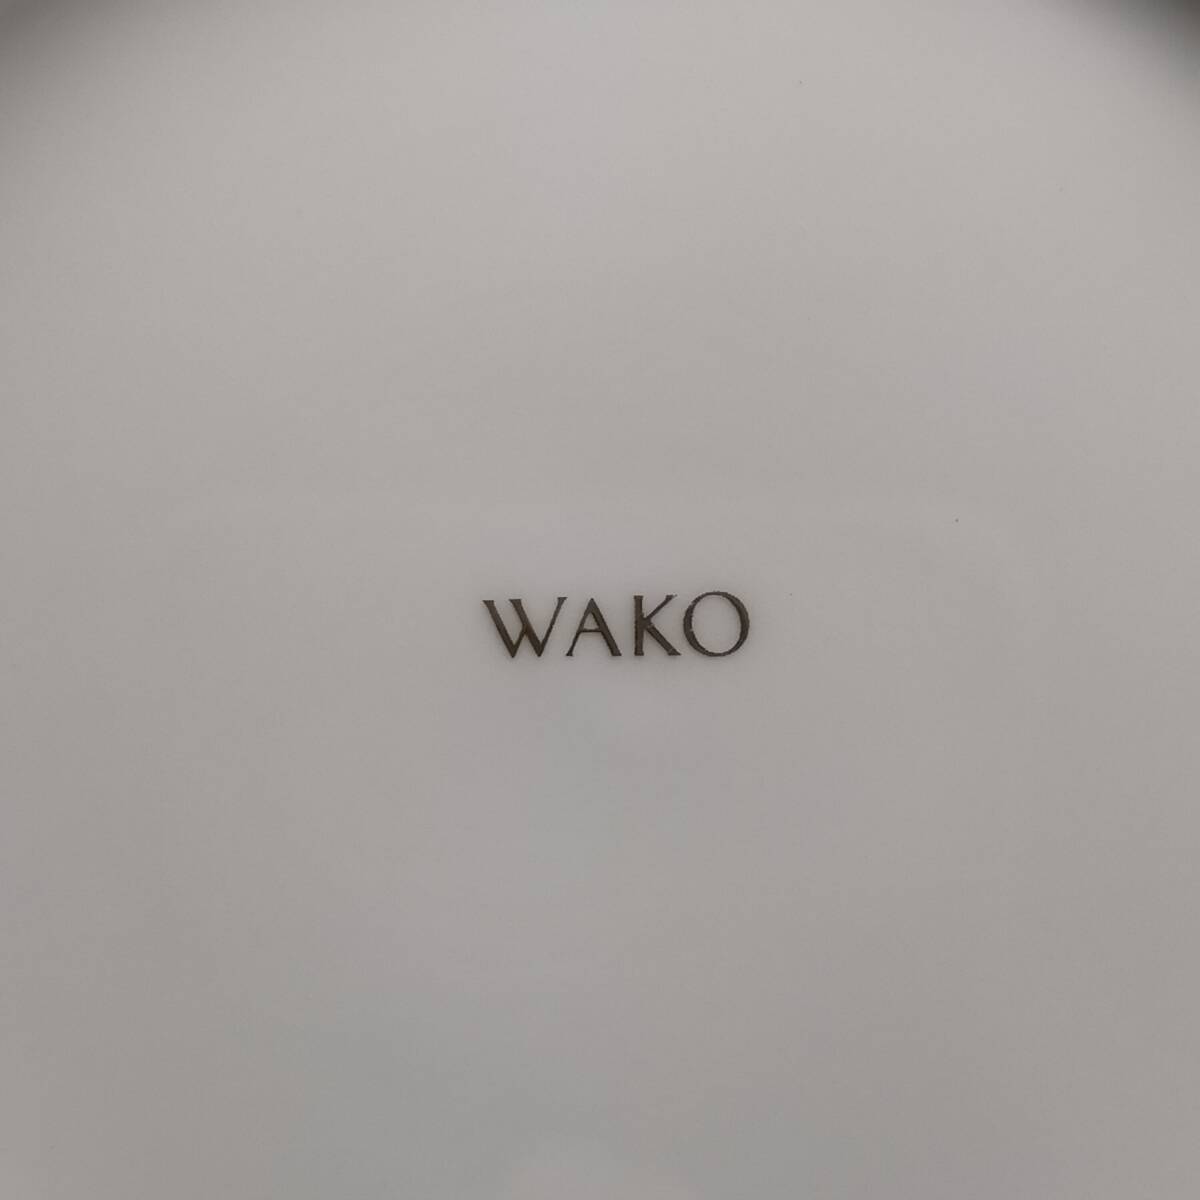 WAKO plate 6 шт. комплект золотая краска белый не использовался товар Гиндза Wako wako- кекс тарелка кекс plate маленькая тарелка брать . тарелка 